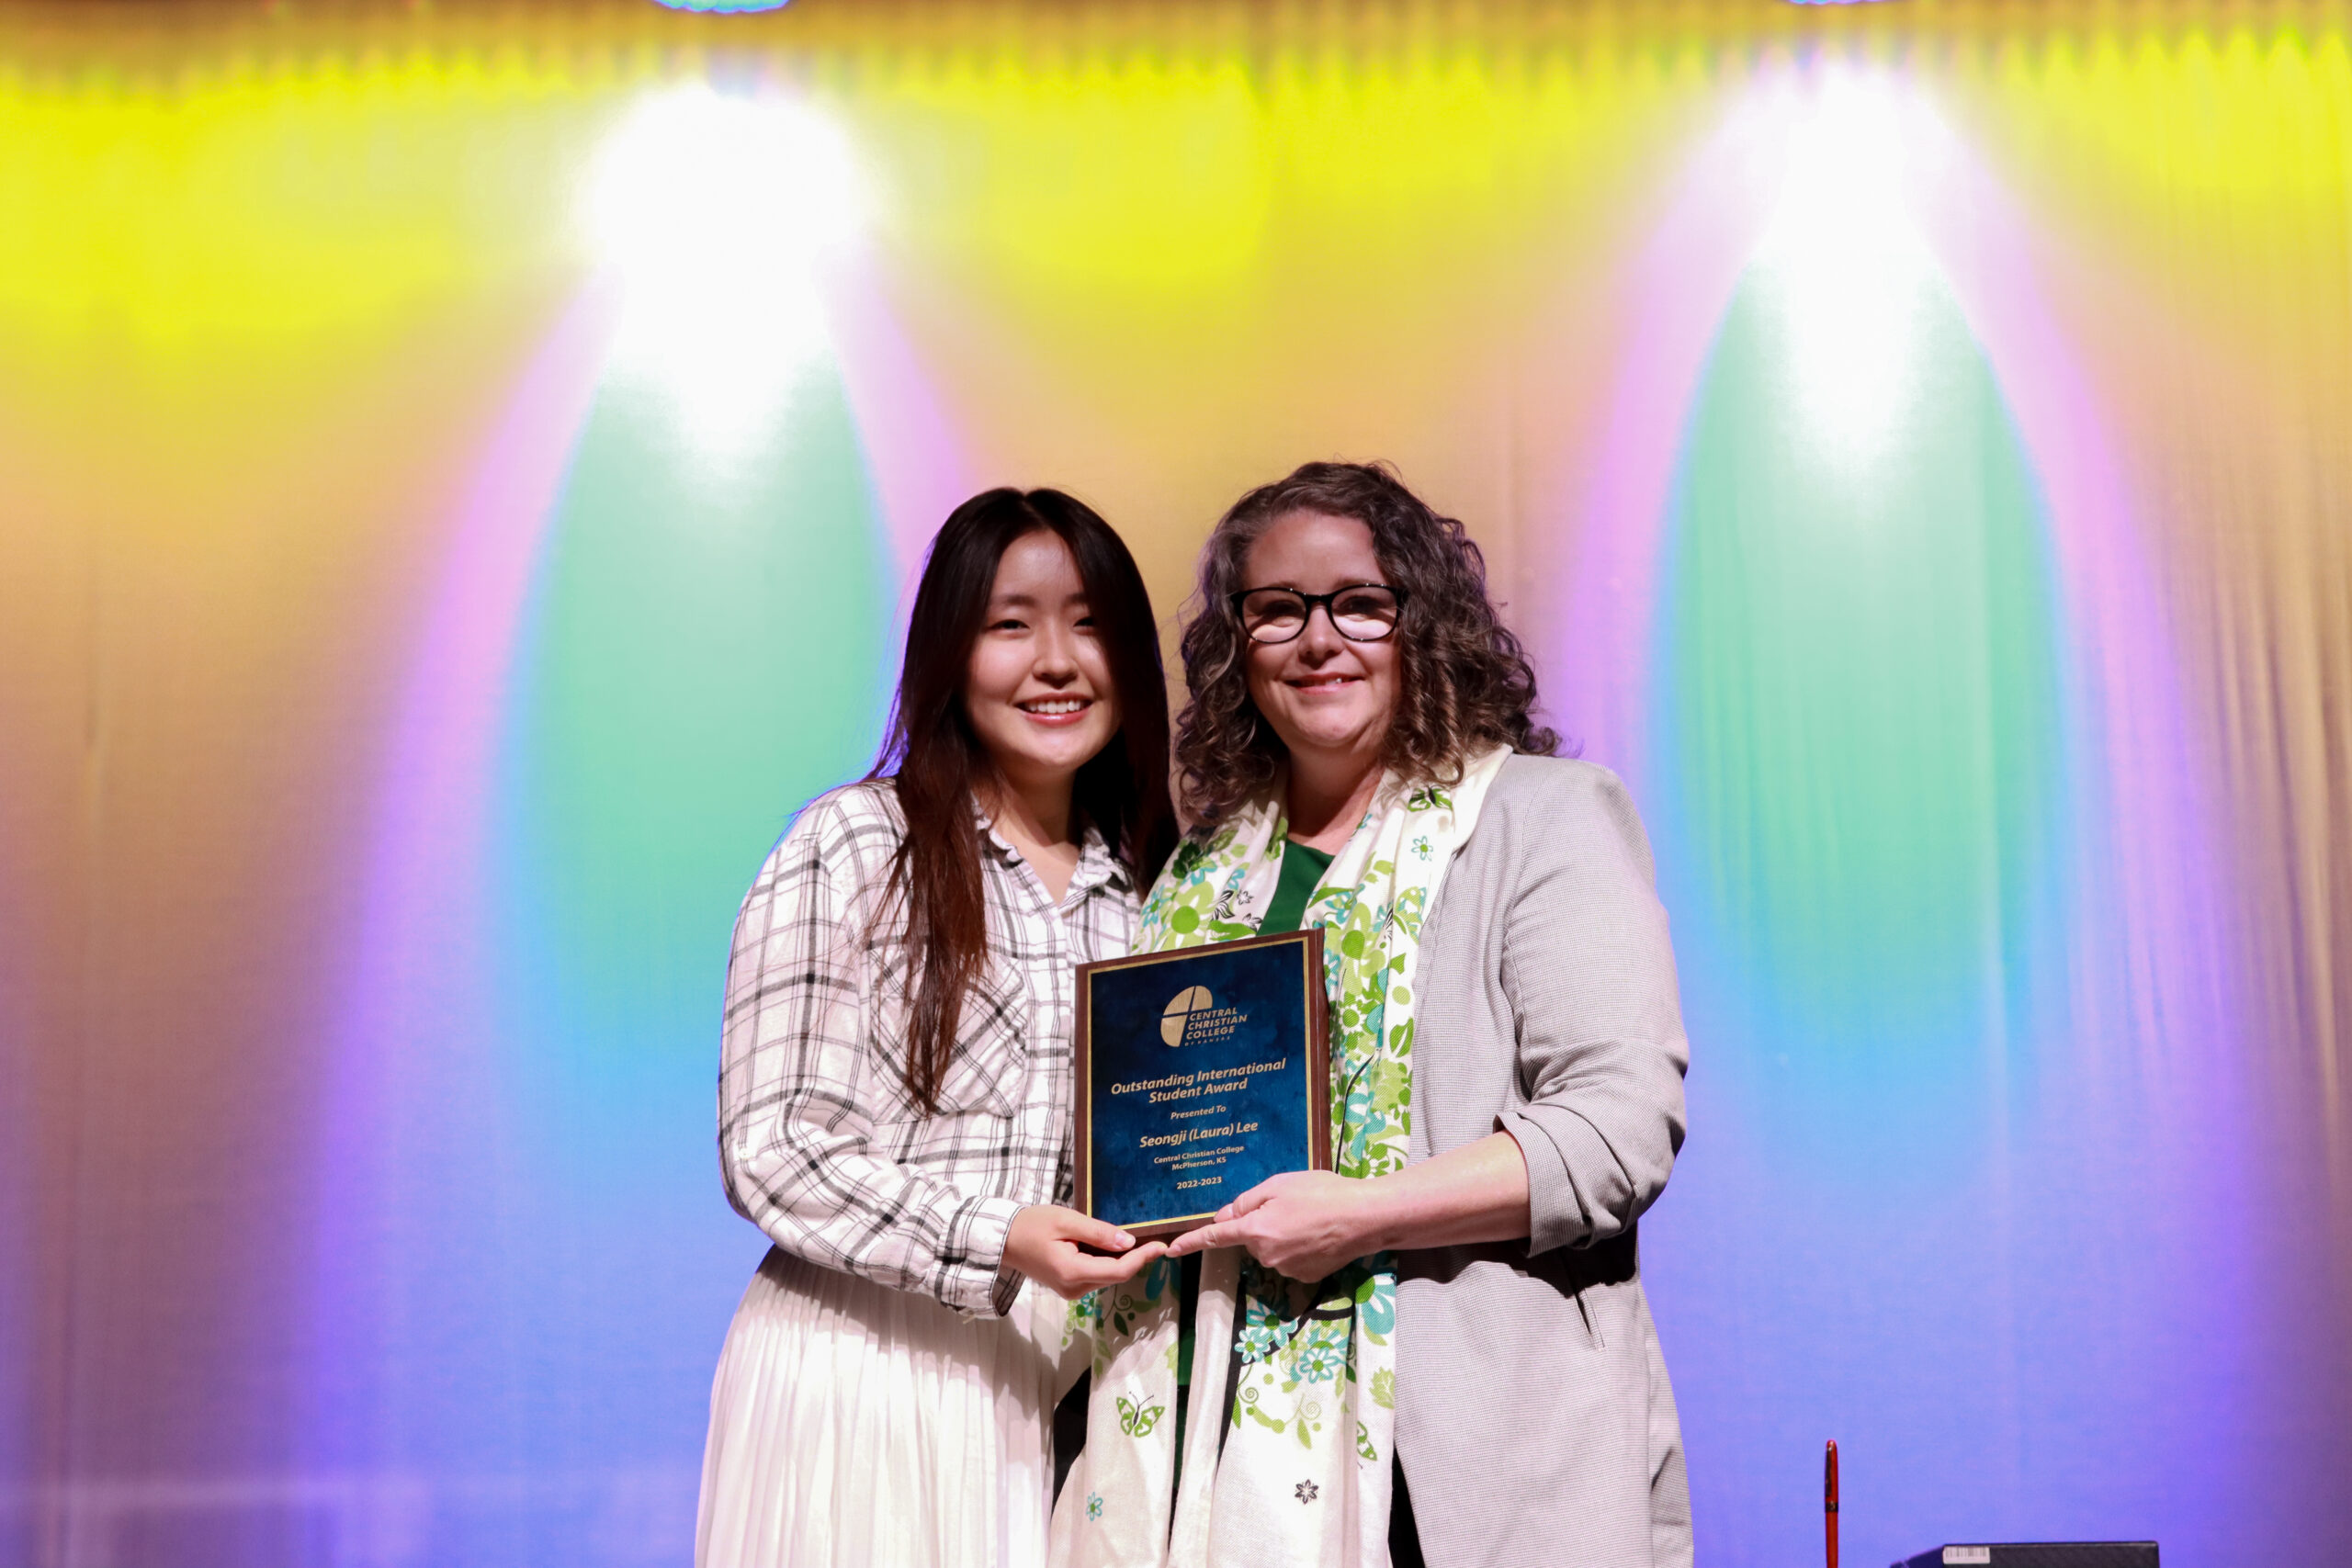 Cathy Brown awards Seongji Laura Lee the Outstanding International Student Award